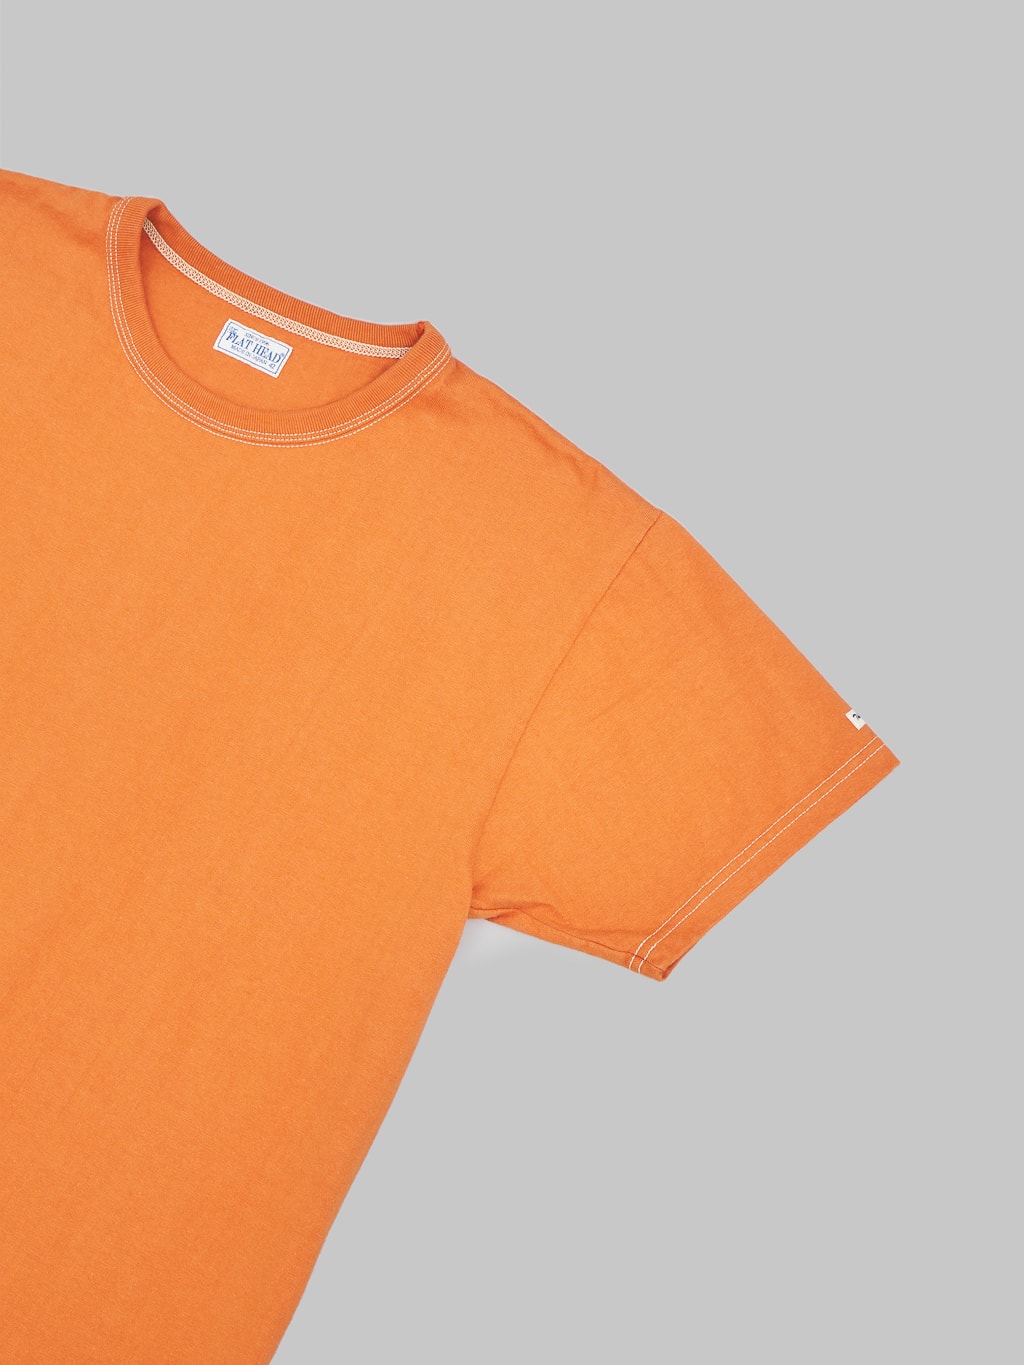 The Flat Head Loopwheeled Heavyweight Plain TShirt Dark Orange 100 cotton